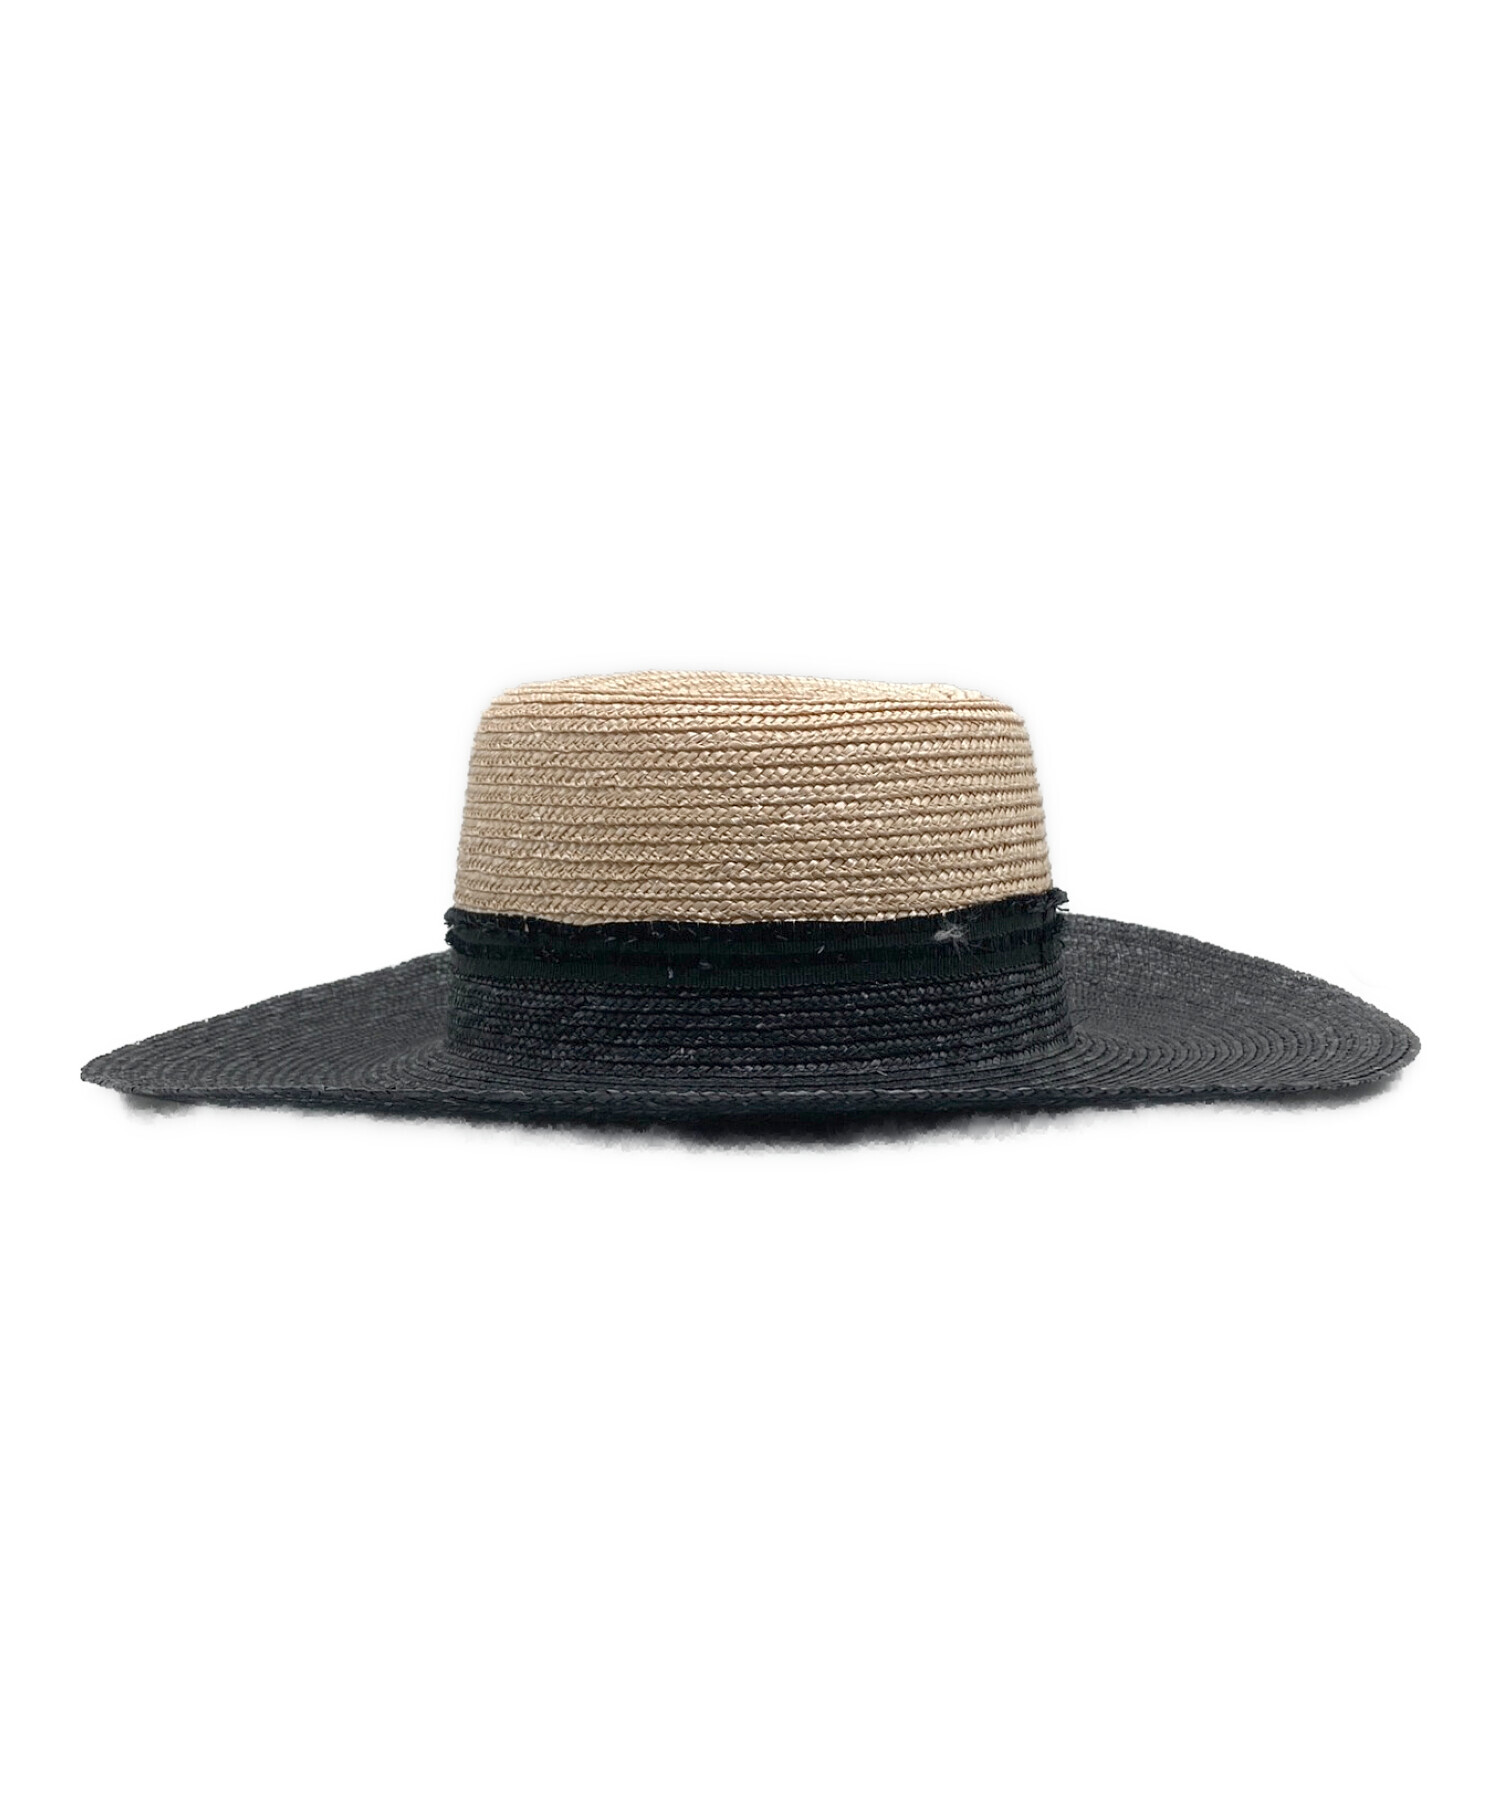 Federicamoretti(フェデリカ モレッティ) ストローハット - 帽子